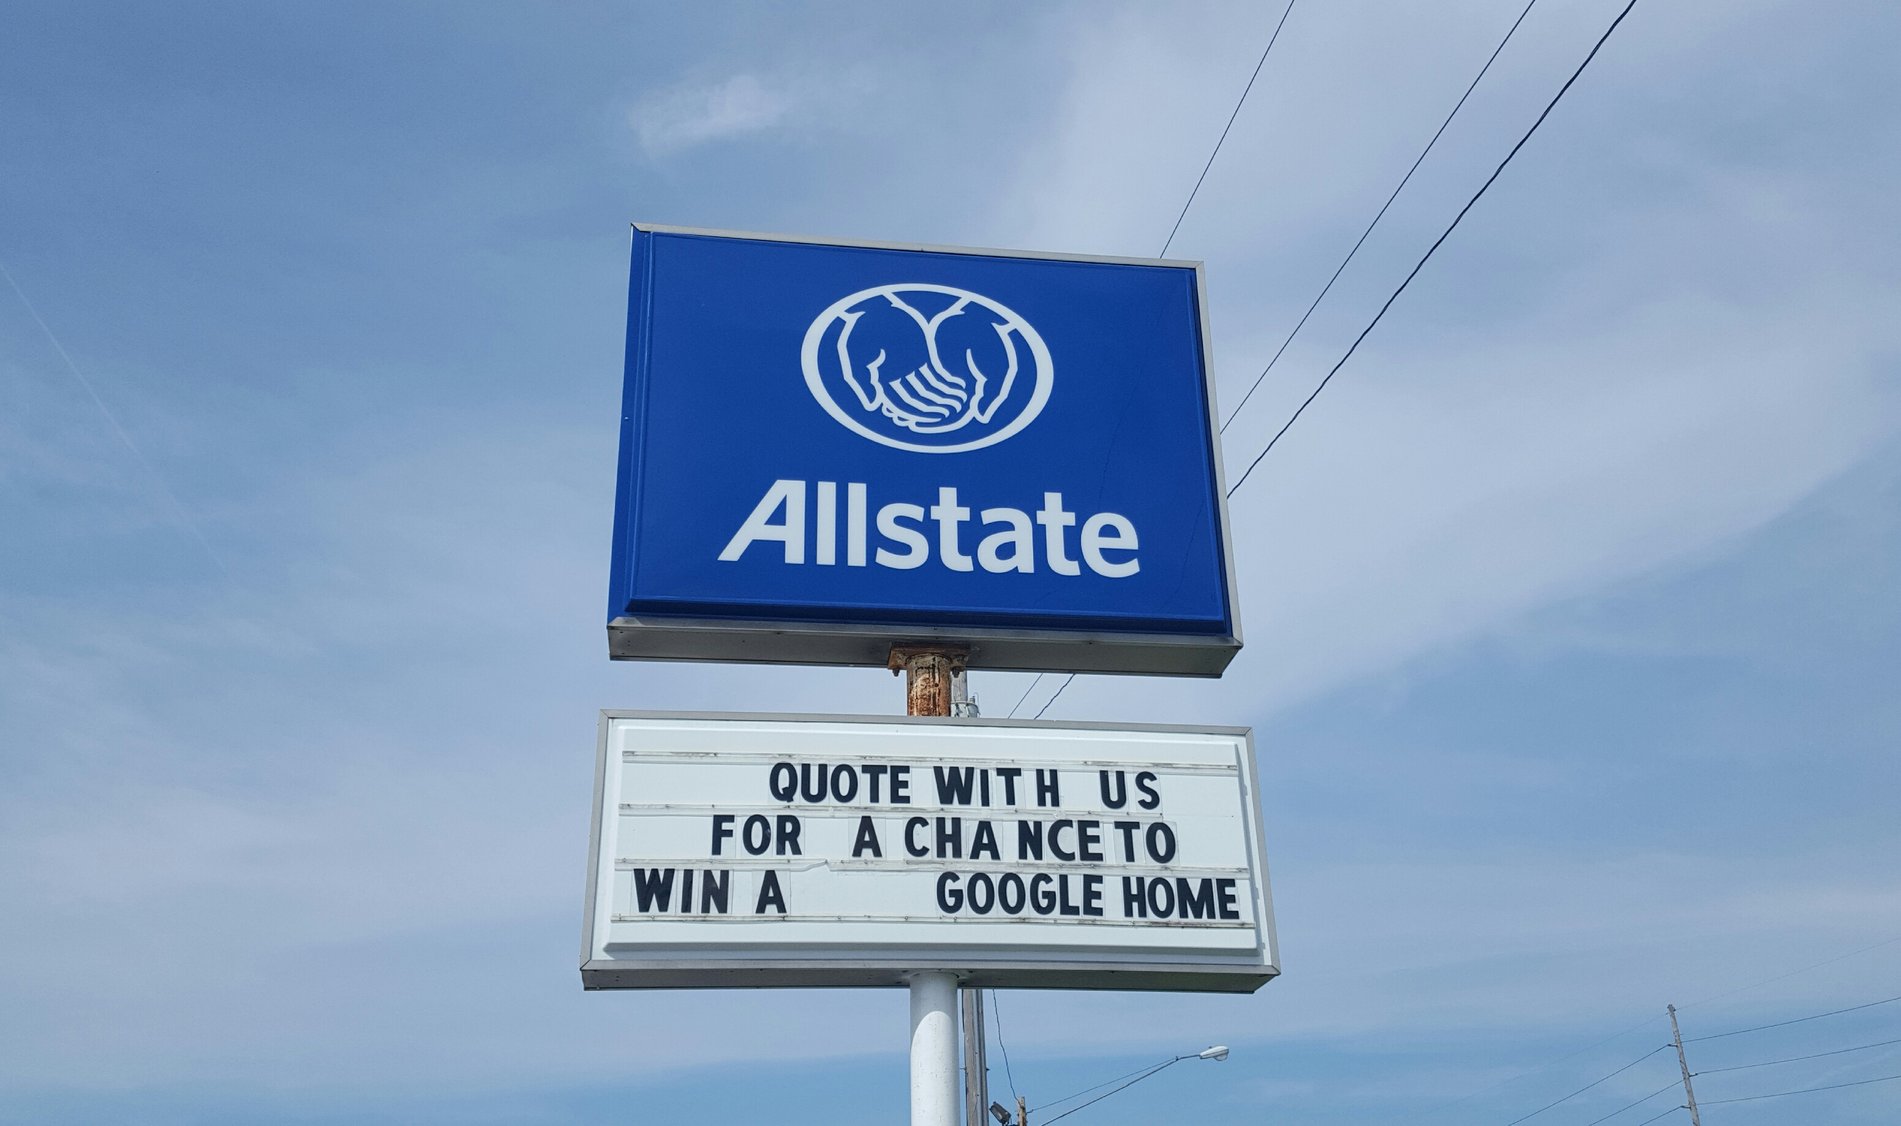 Allstate Car Insurance in Belleville, IL Albert Orelt